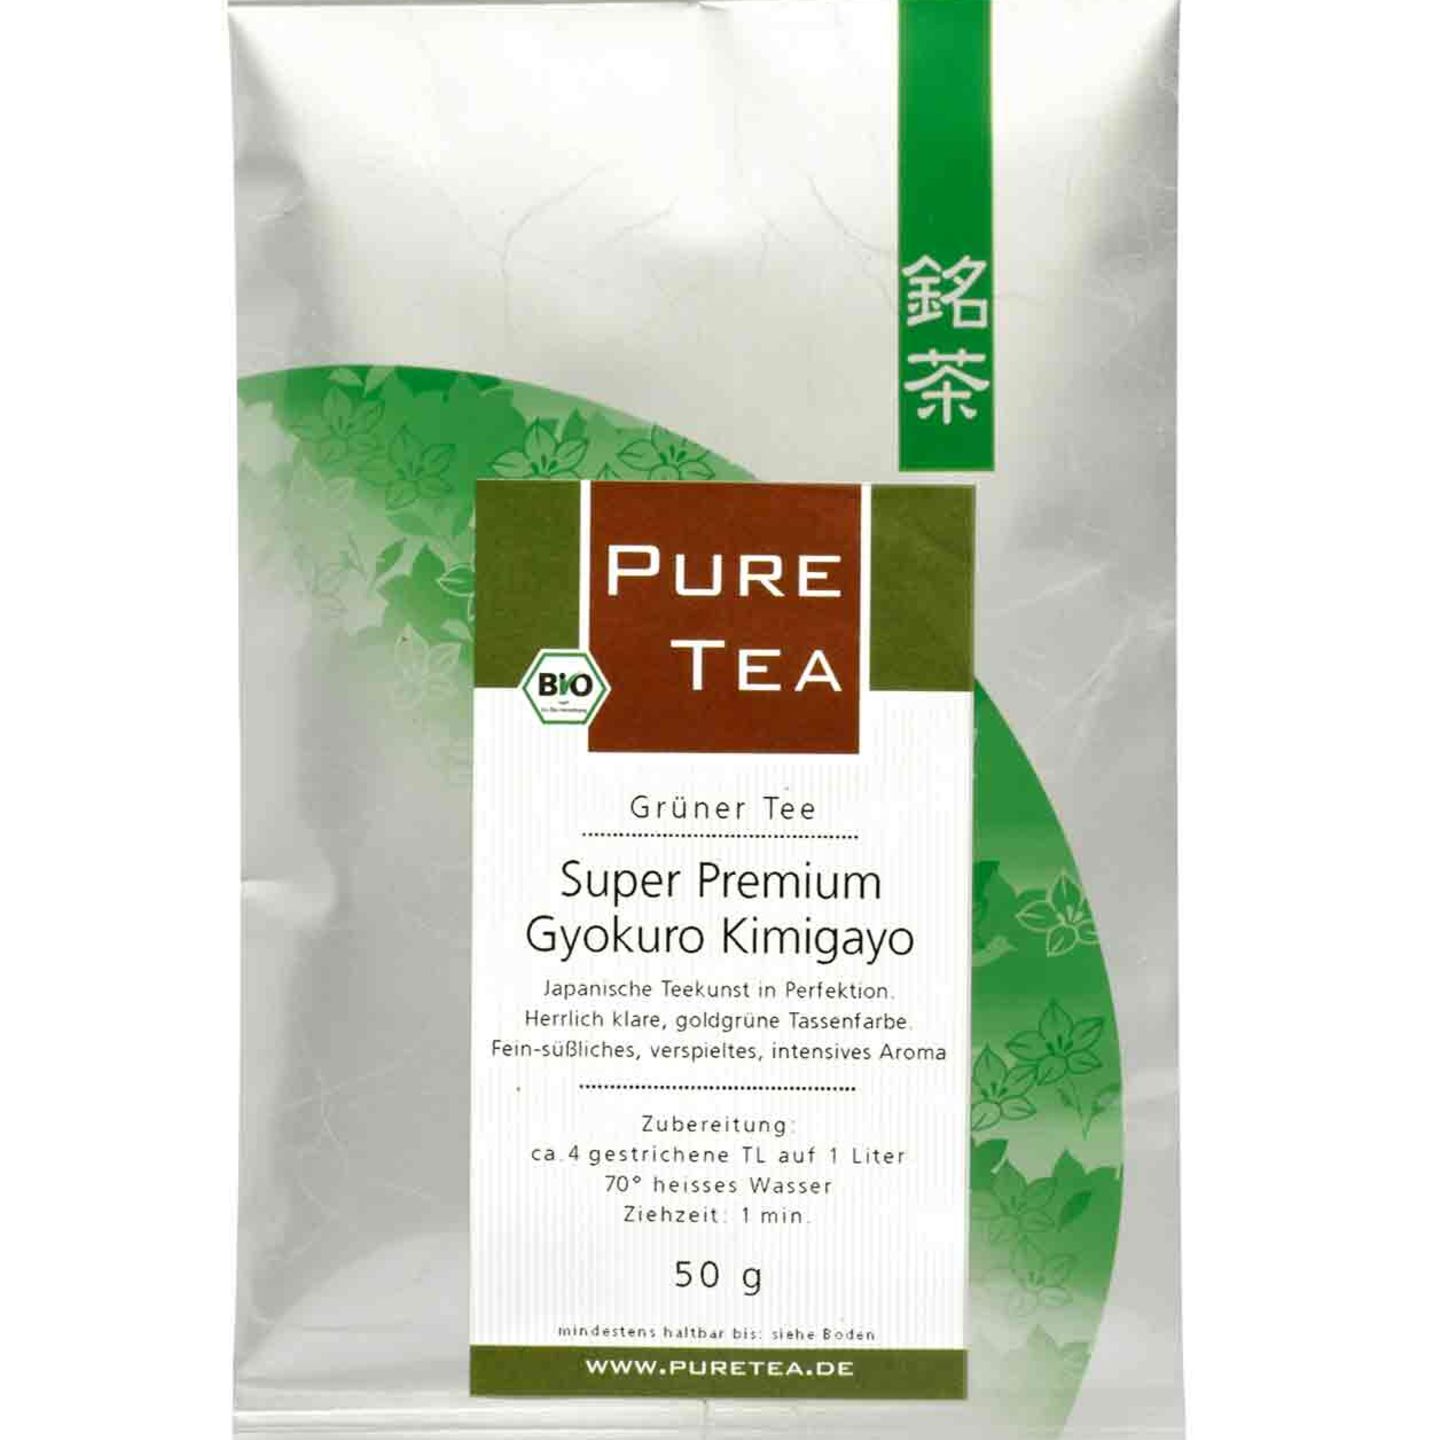 Super Premium Gyokuro Kimigayo von Pure Tea